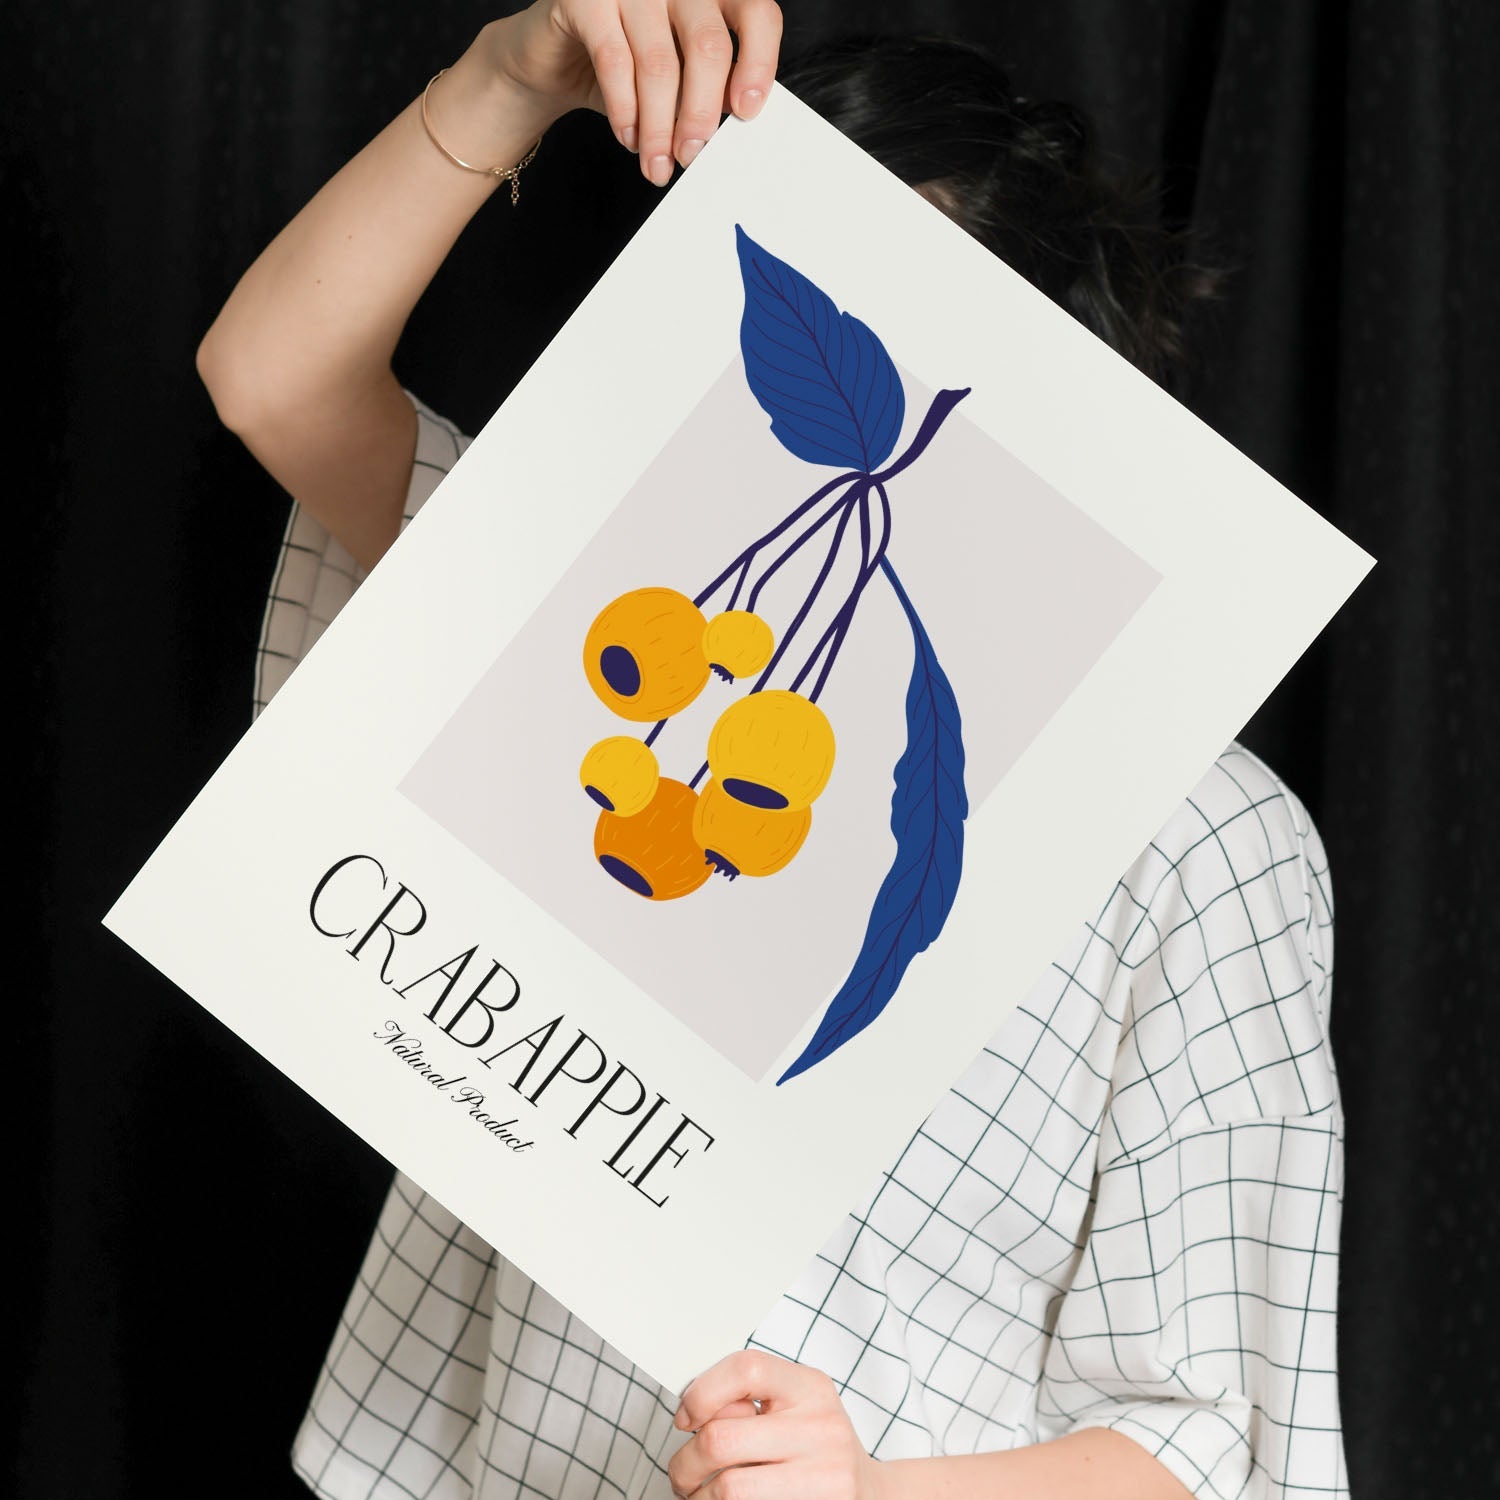 Crabapple-Artwork-Nacnic-Nacnic Estudio SL